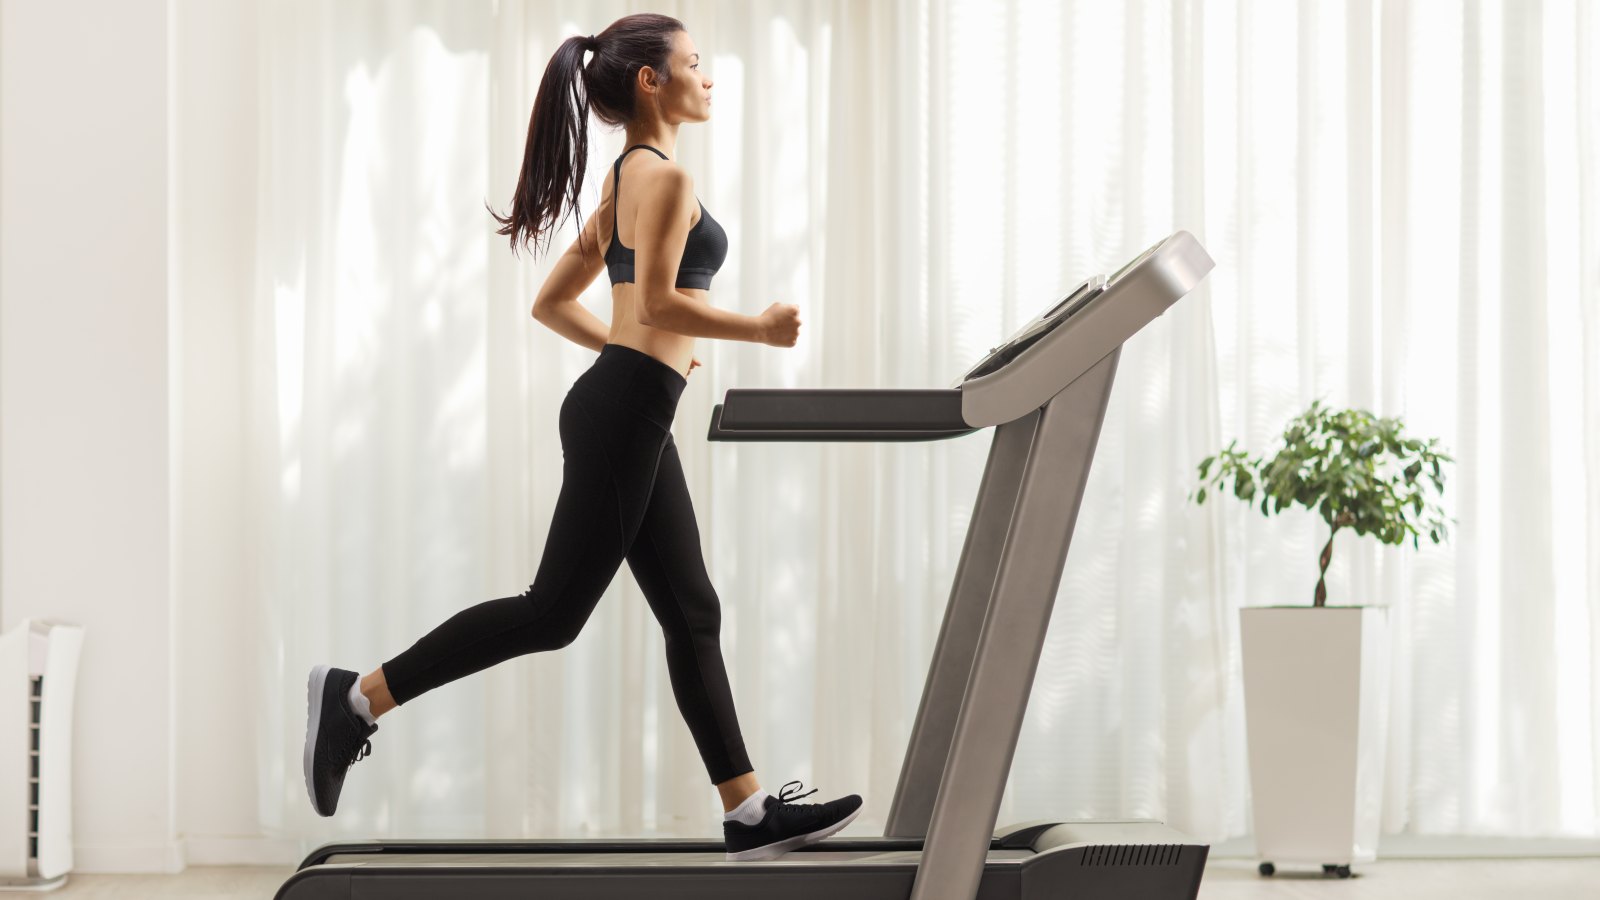 at-home treadmill